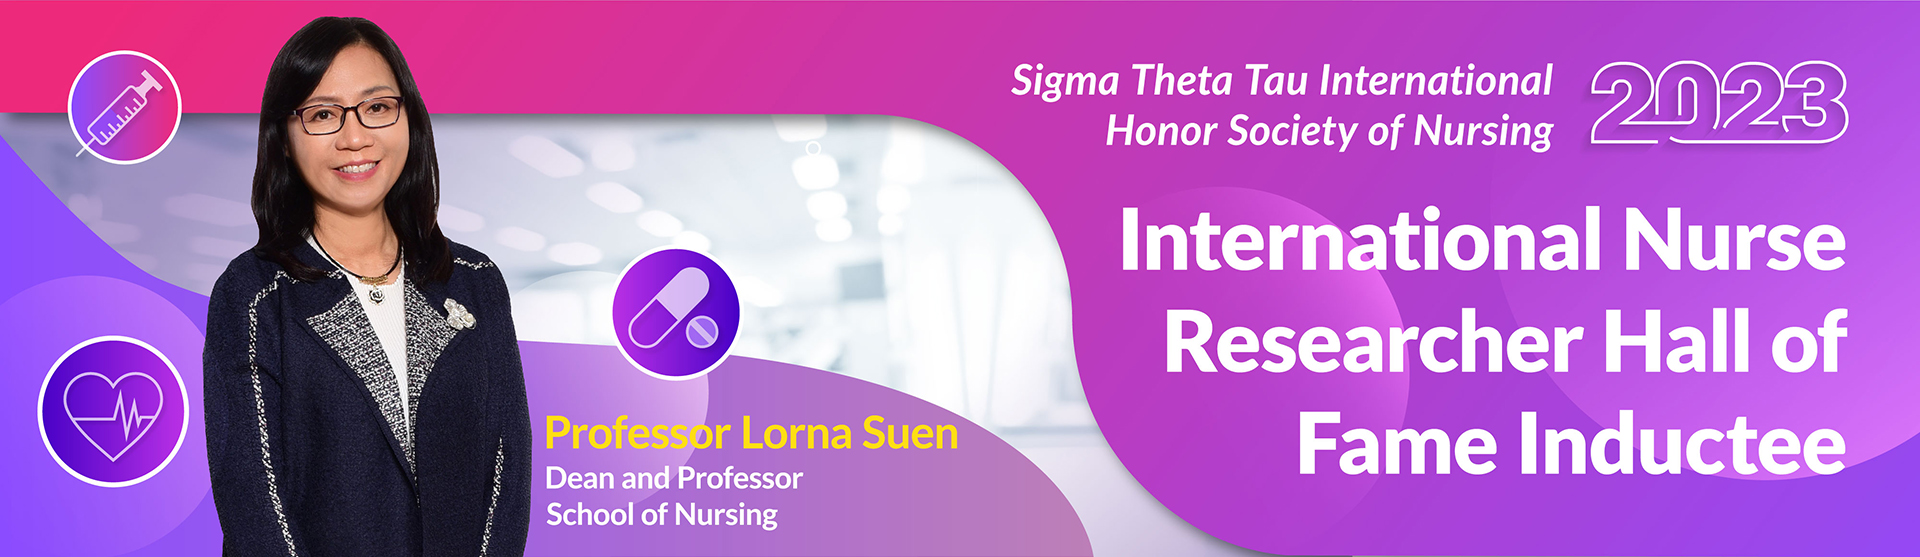 Professor Lorna Suen Inducted into International Nurse Researcher Hall of Fame